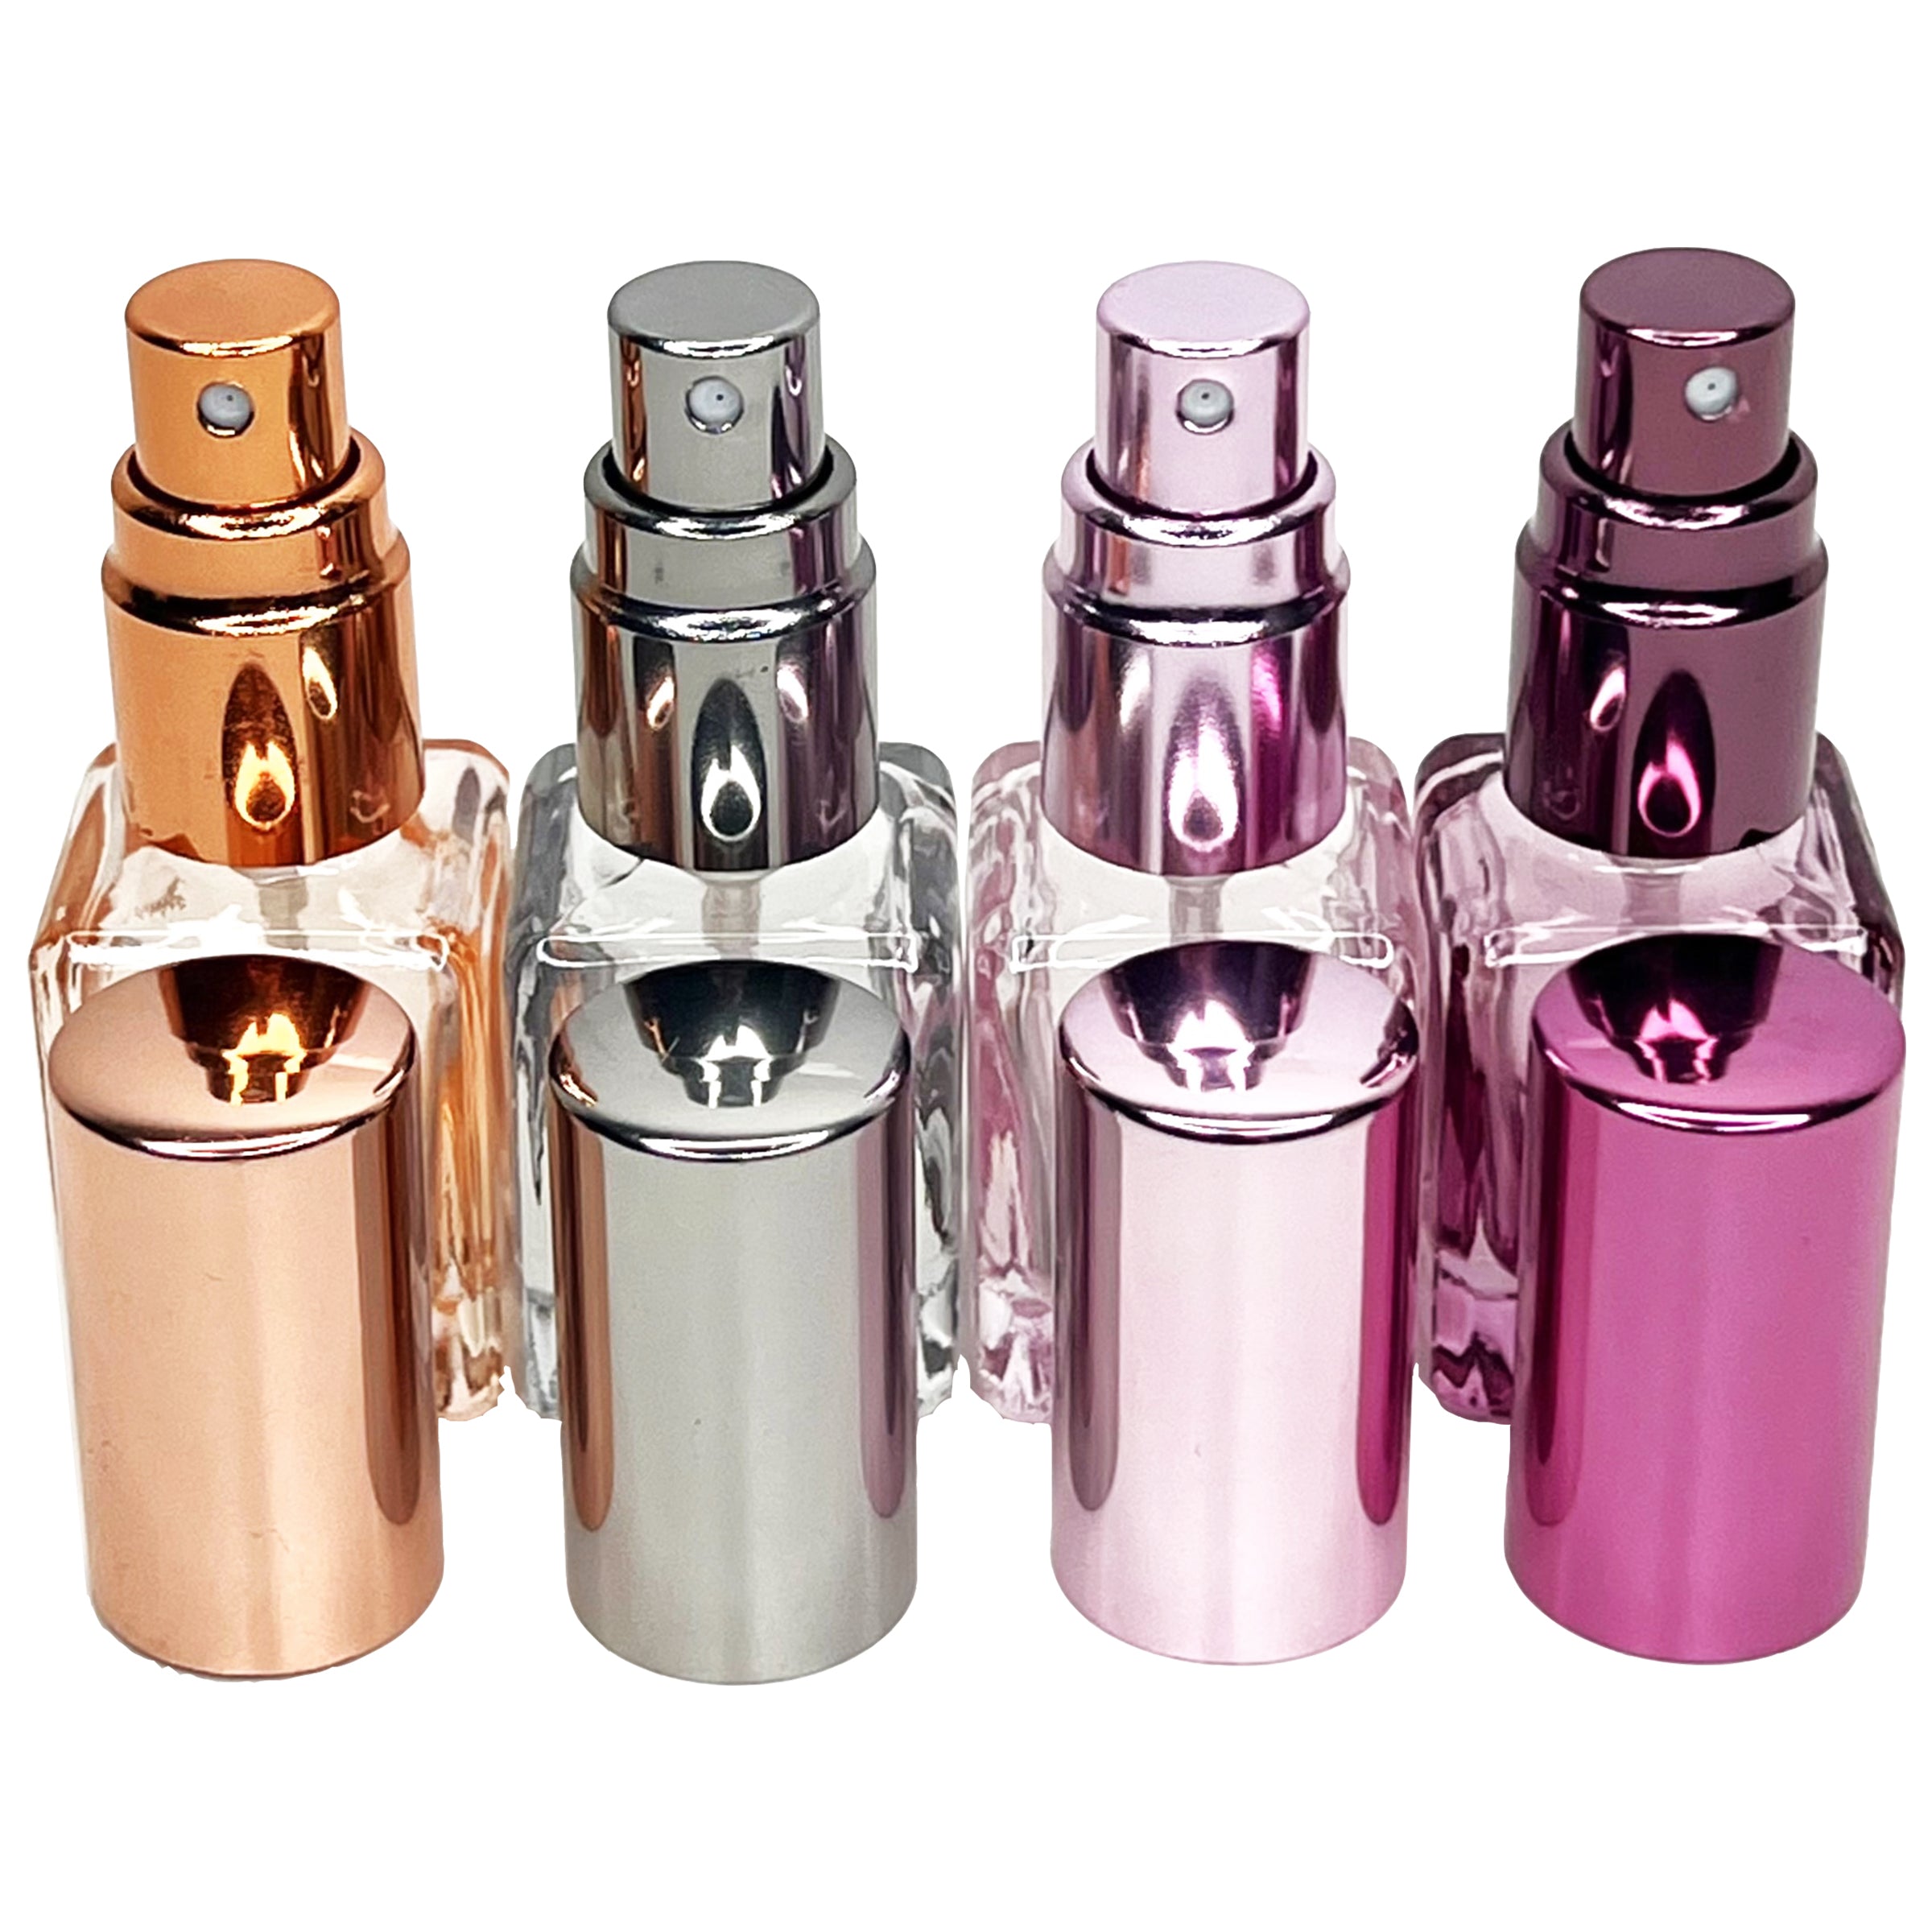 5ml 0.17oz colored cube thick glass mini perfume bottles